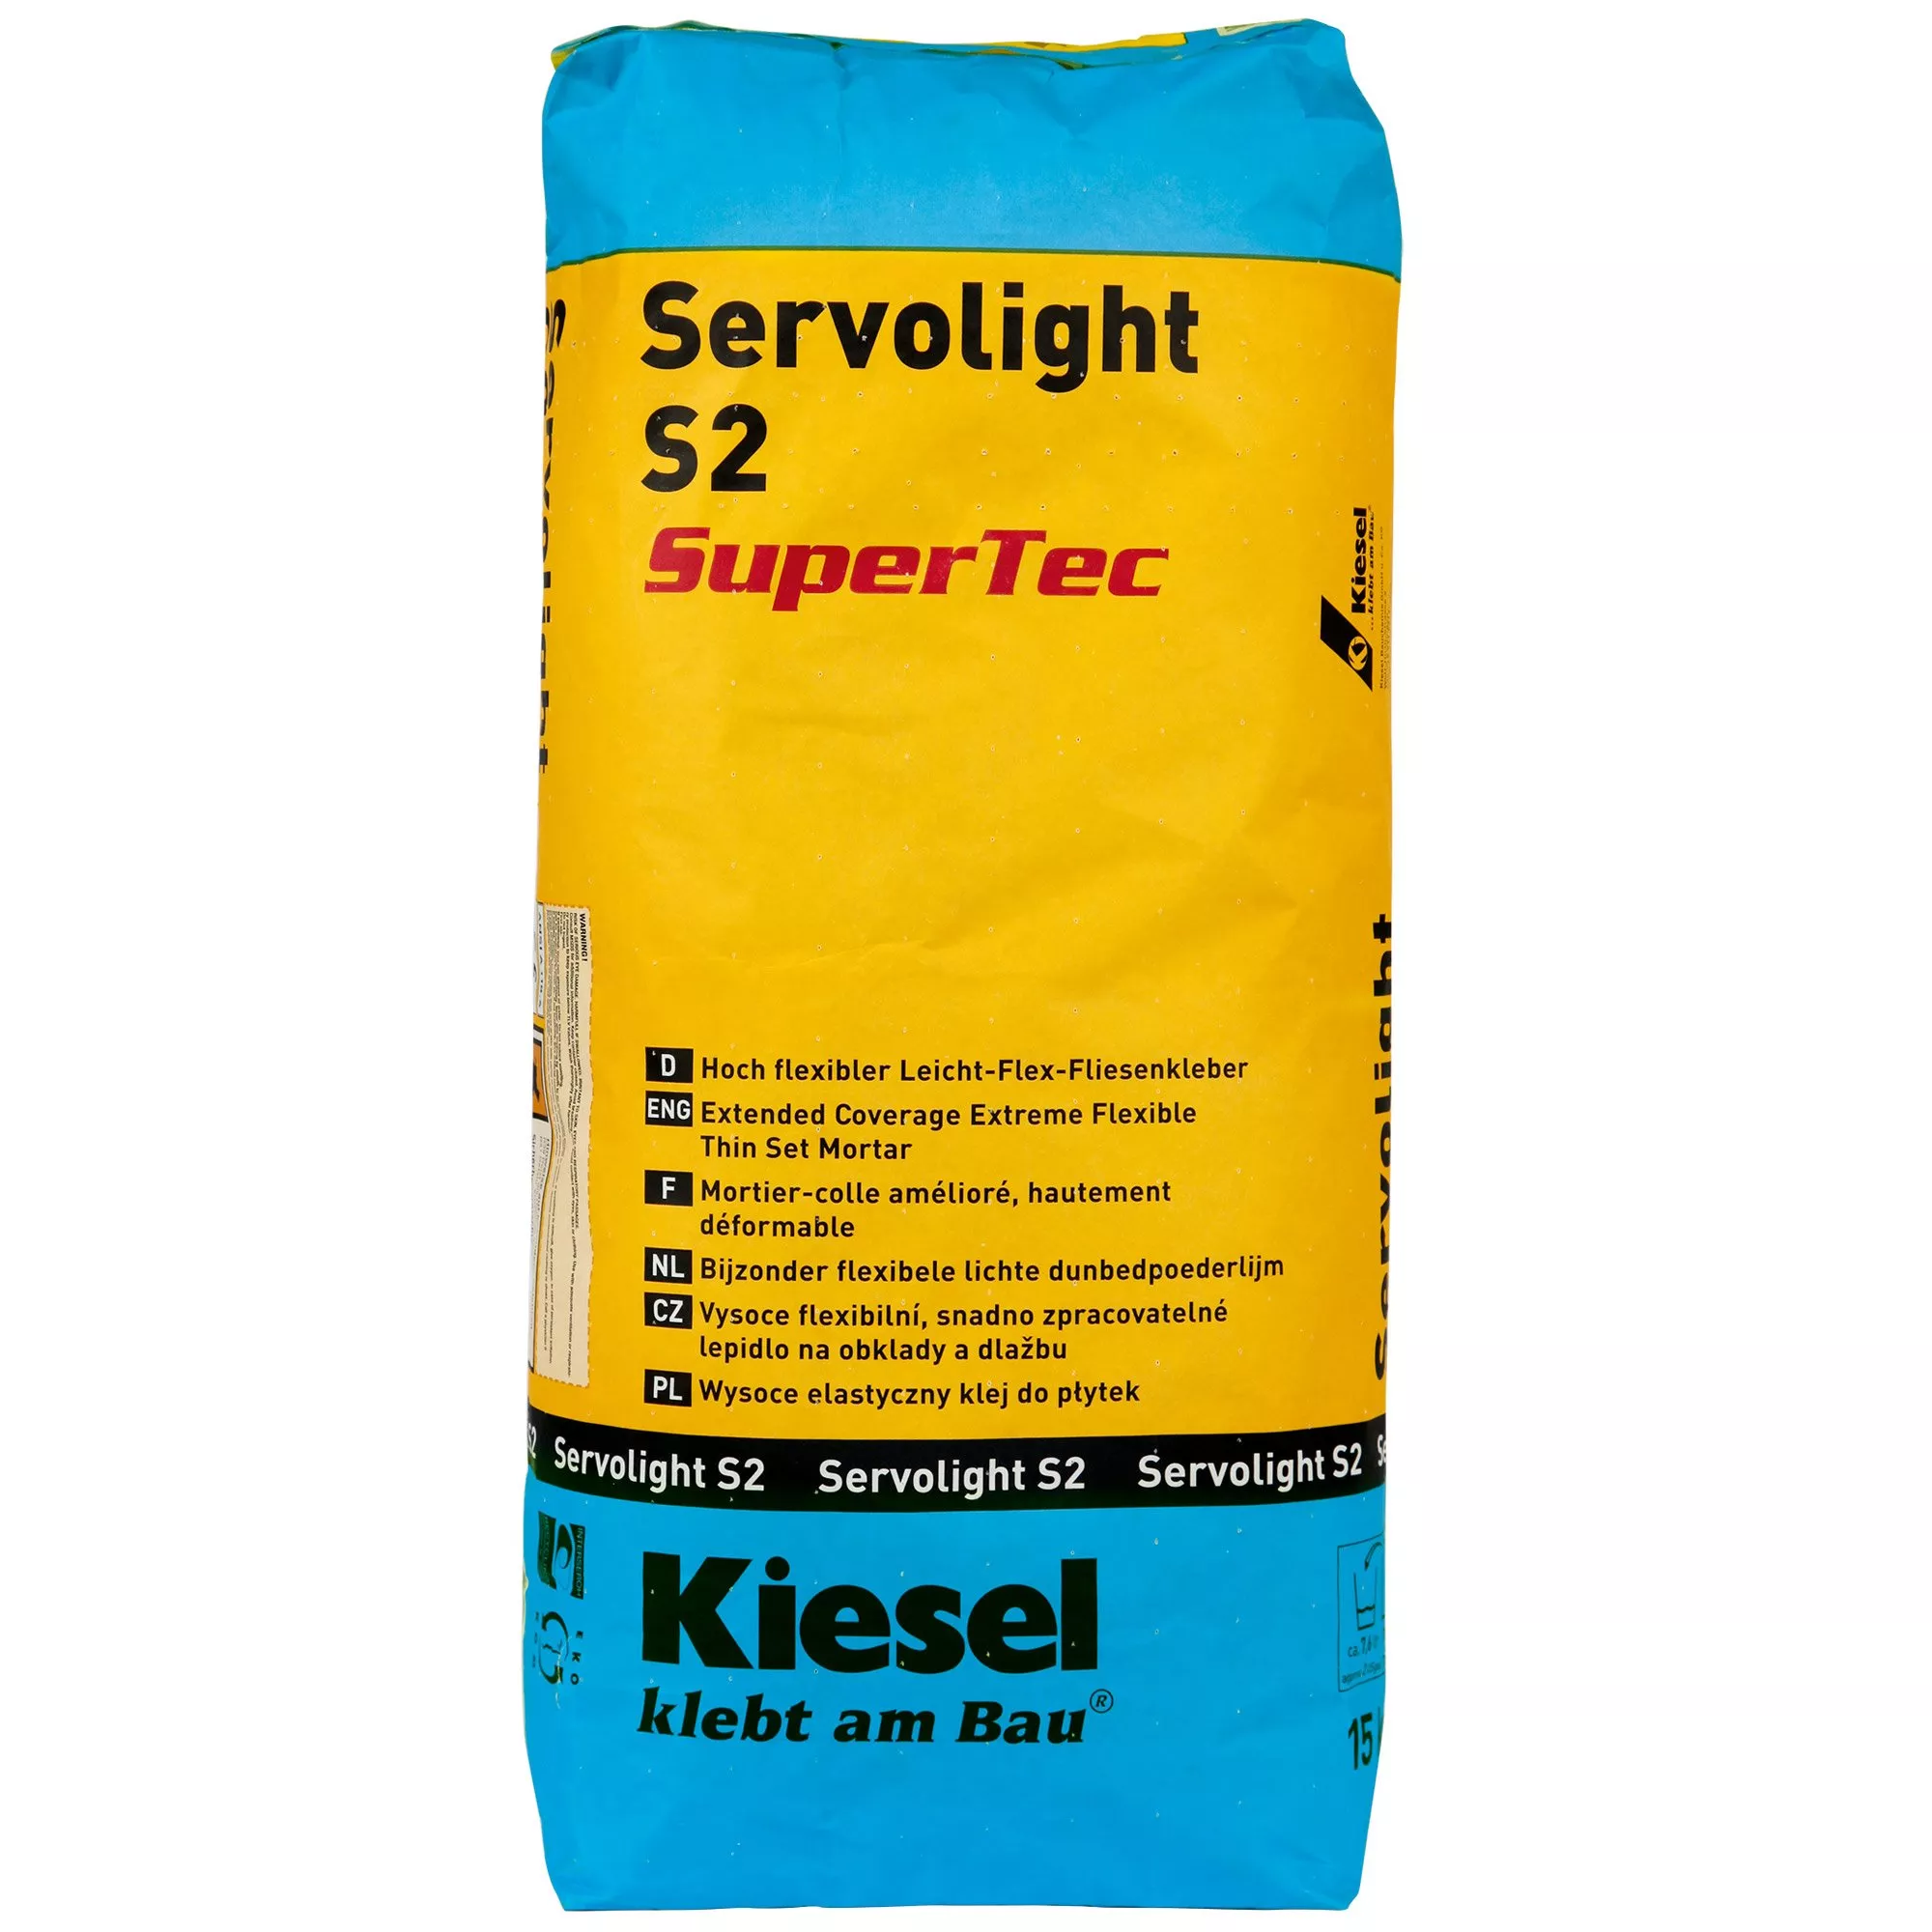 Kiesel Servolight S2 SuperTec - highly flexible light-flex tile adhesive (15KG)